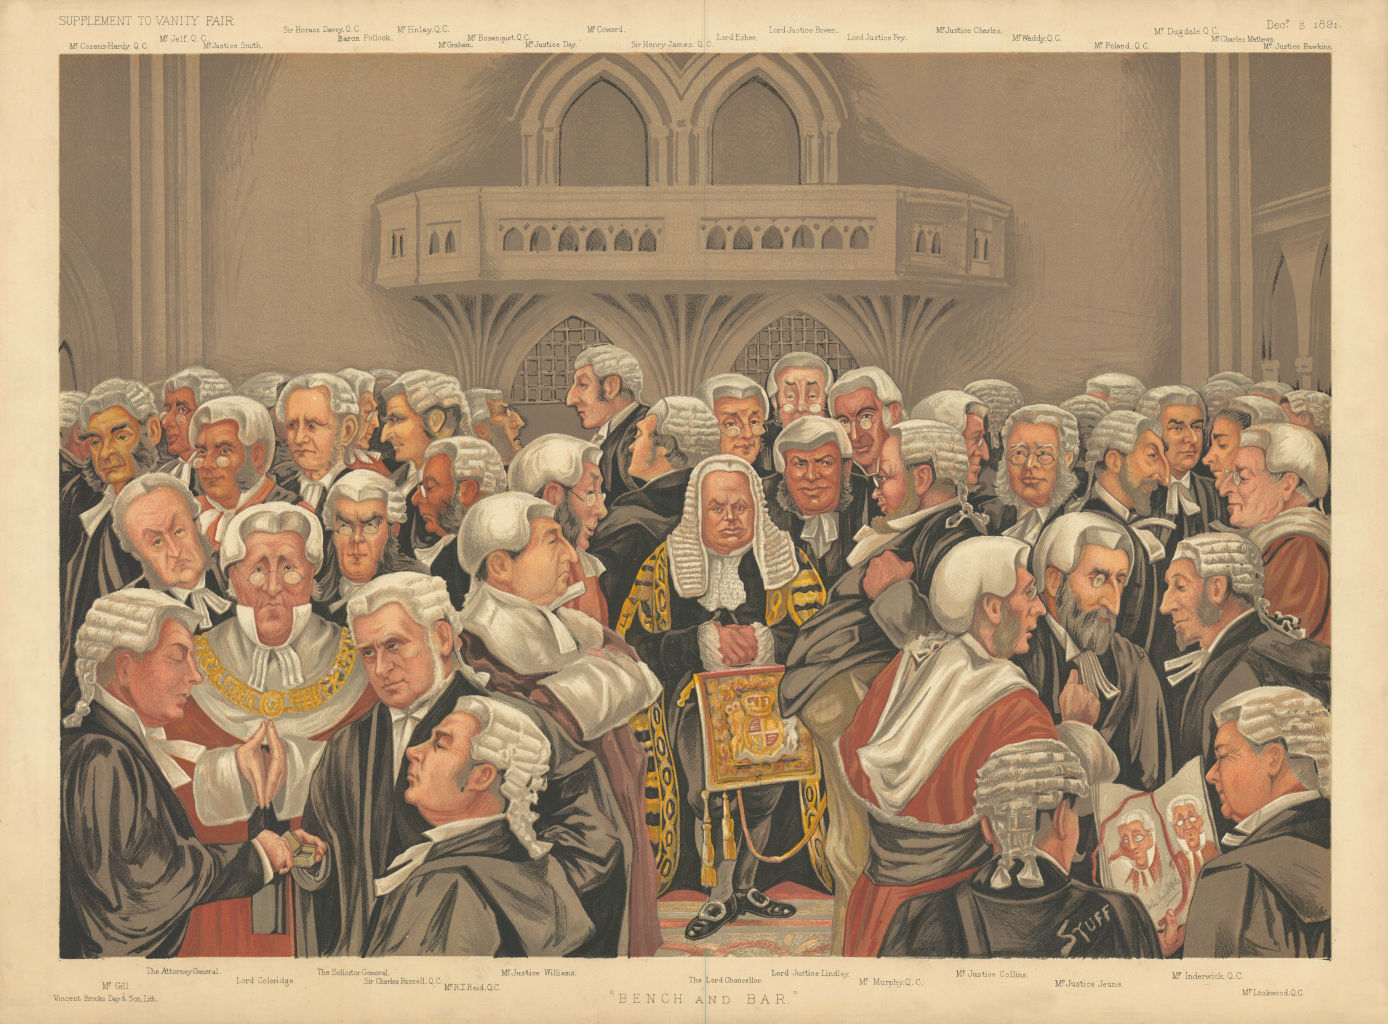 Associate Product VANITY FAIR SPY CARTOON FOLIO. Group of jurists 'Bench & Bar' By STUFF. Law 1891